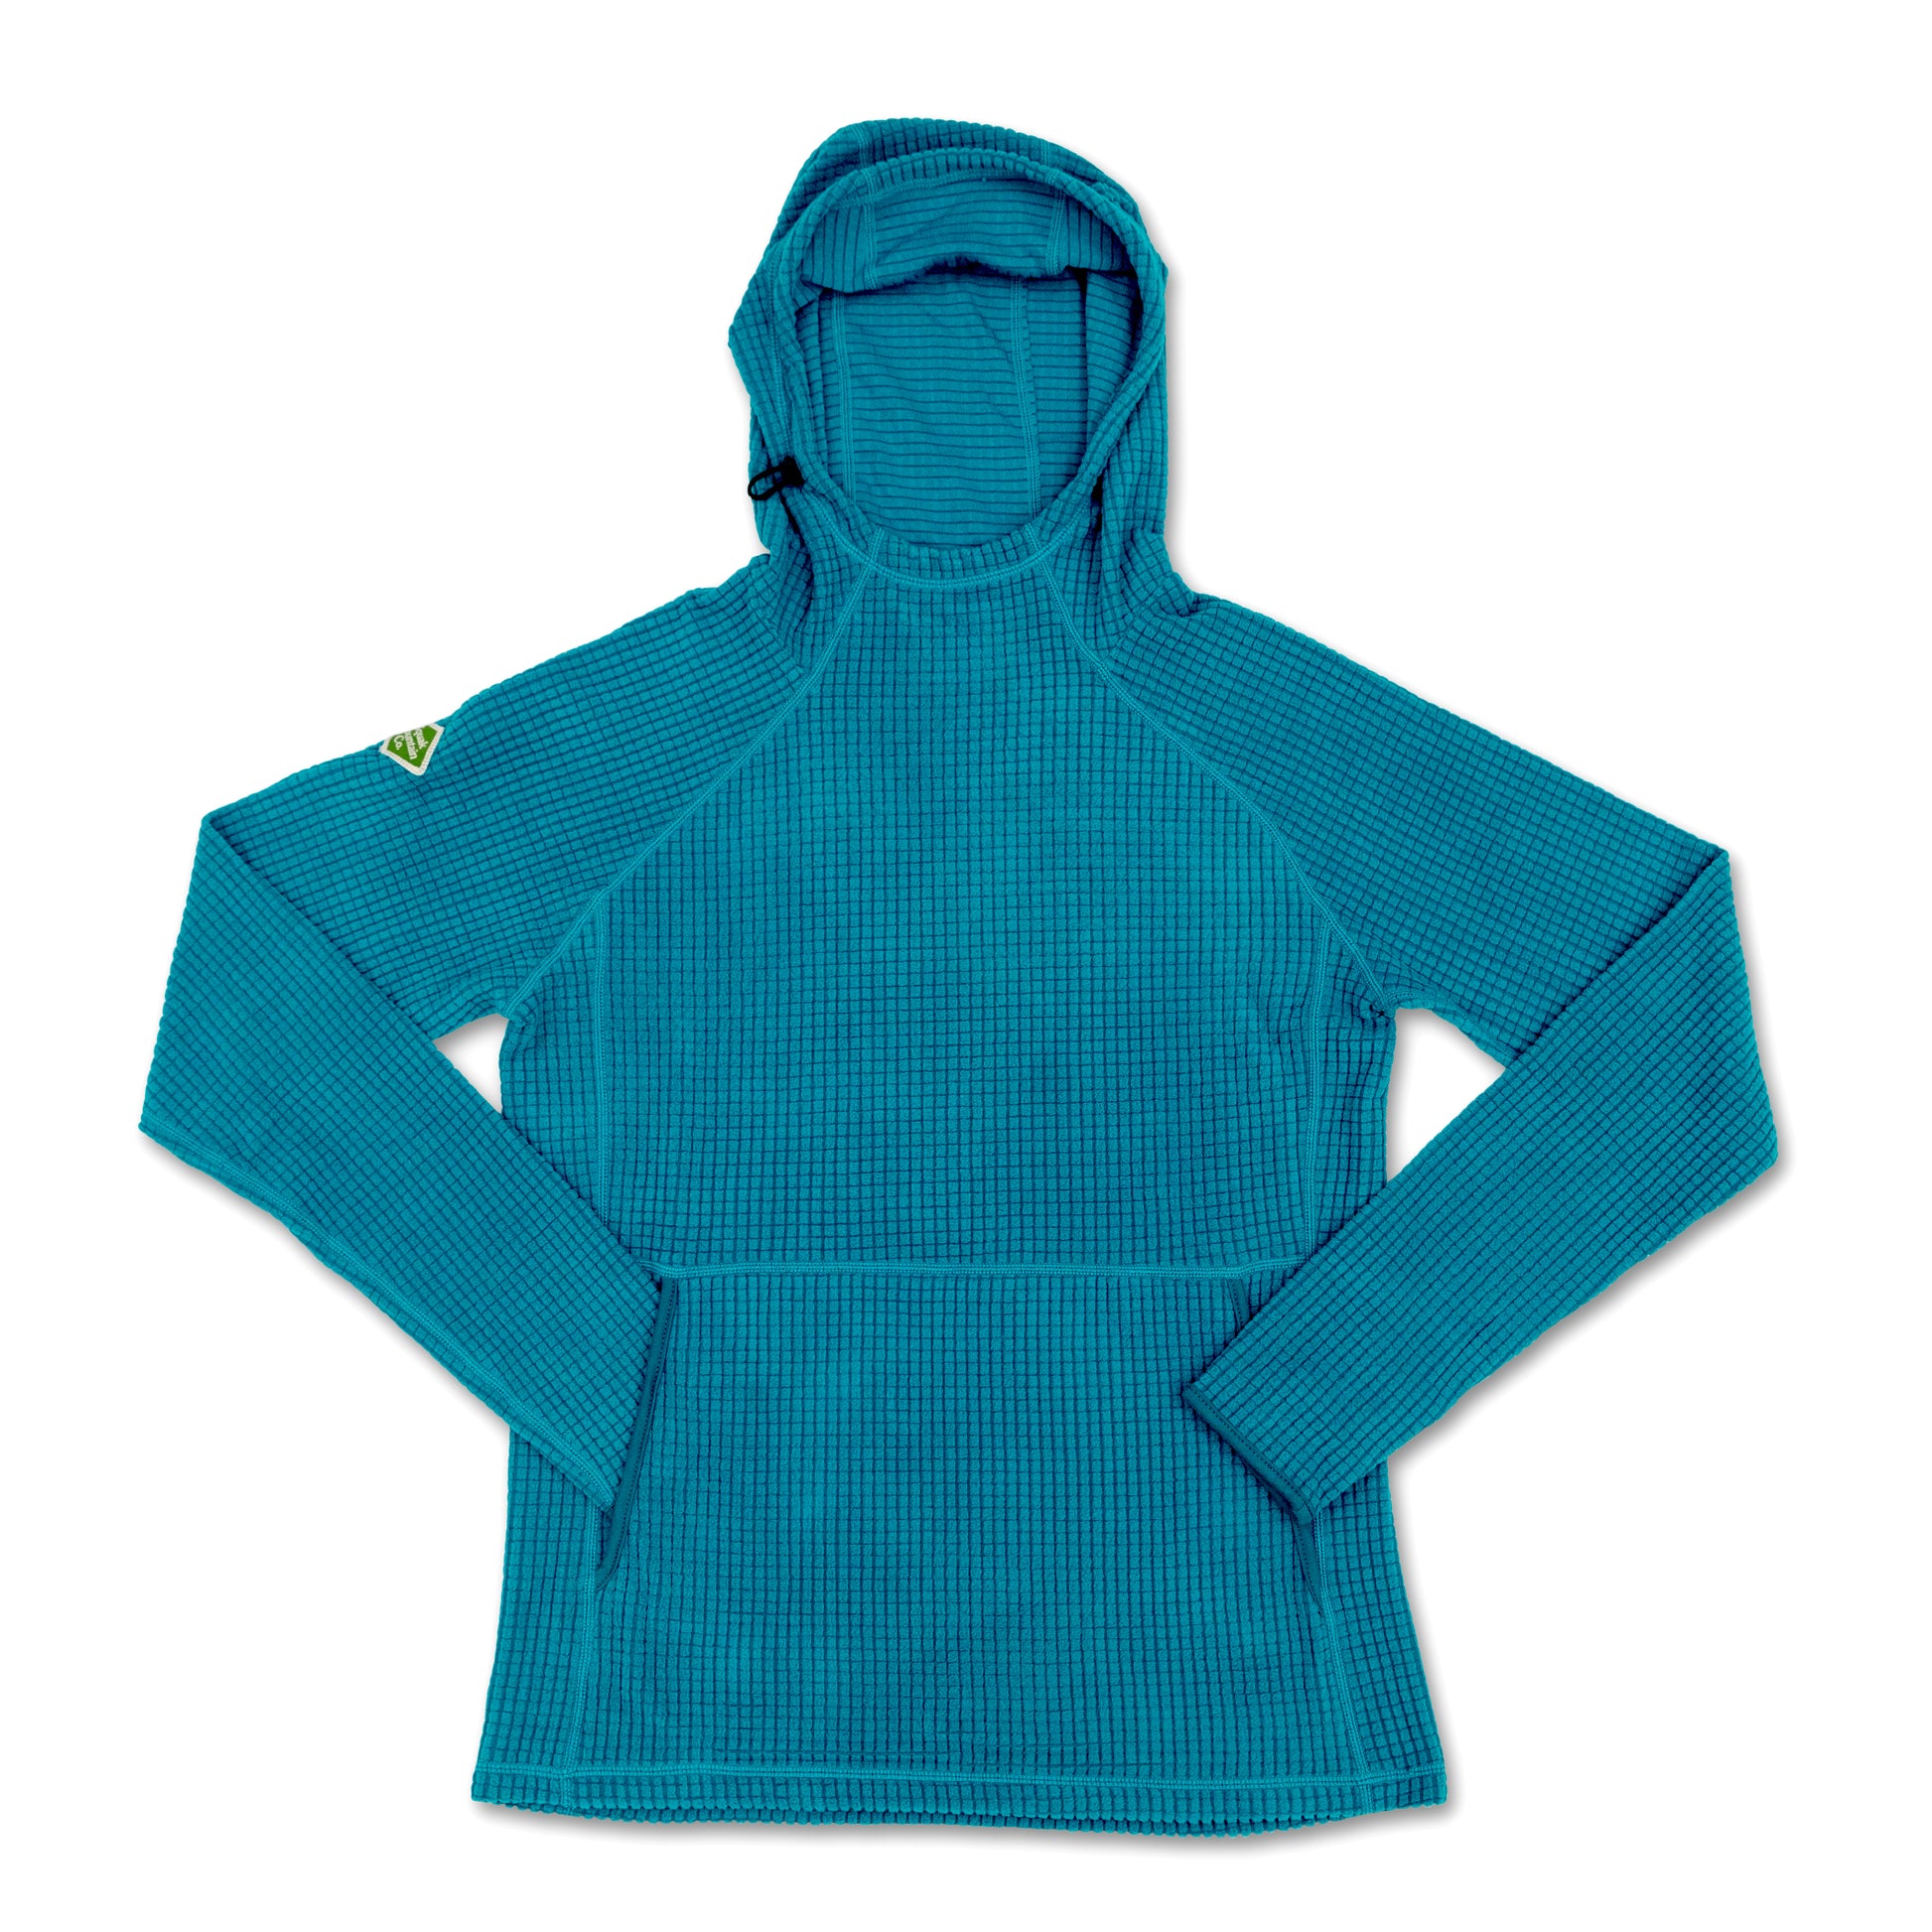 Bullitt blue grid fleece hoodie from Squak Mountain Co.